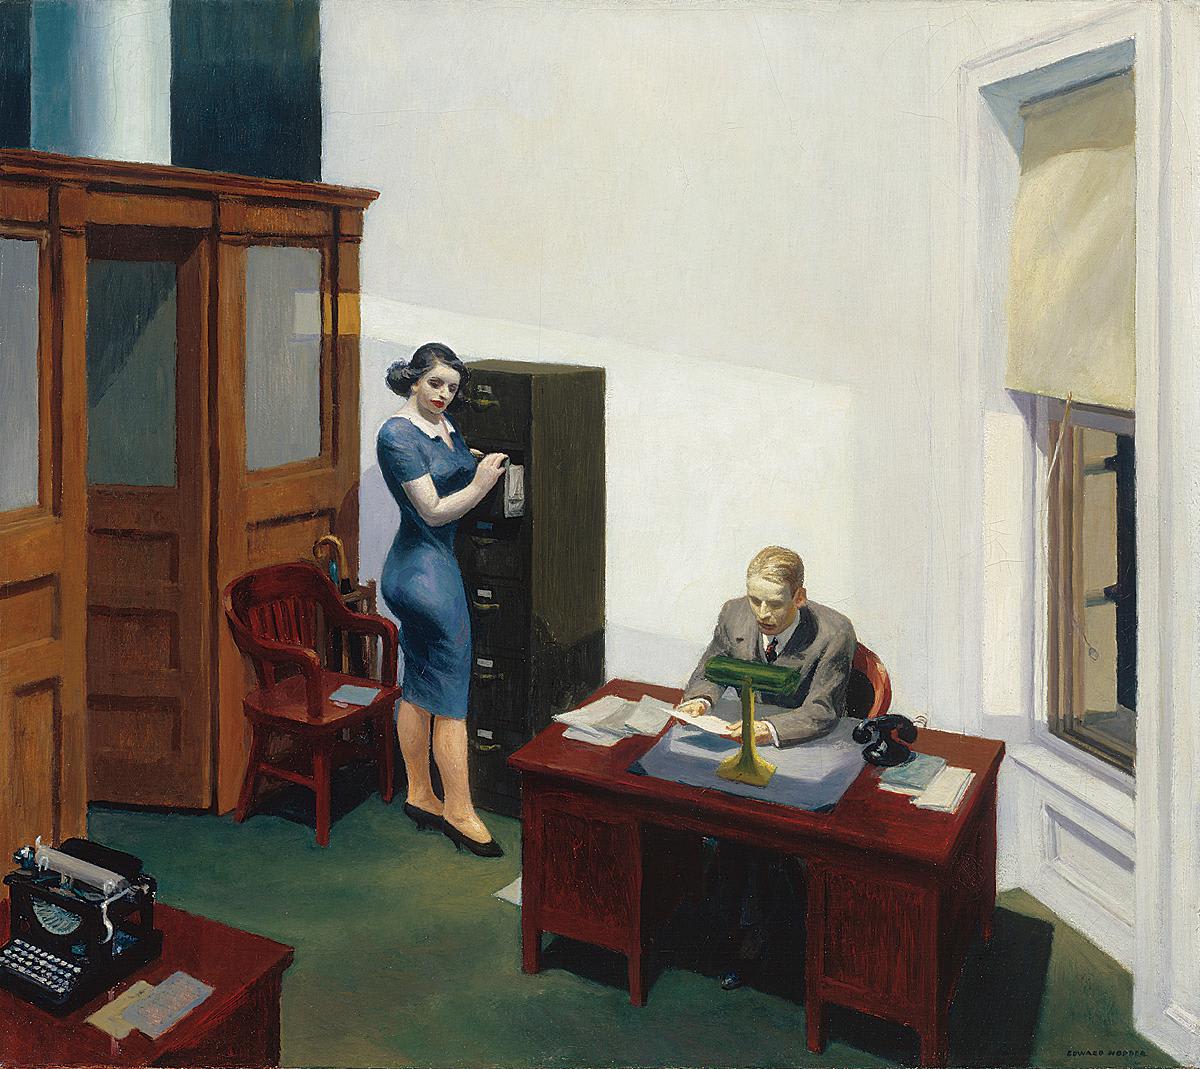 Edward Hopper, "Office at Night"